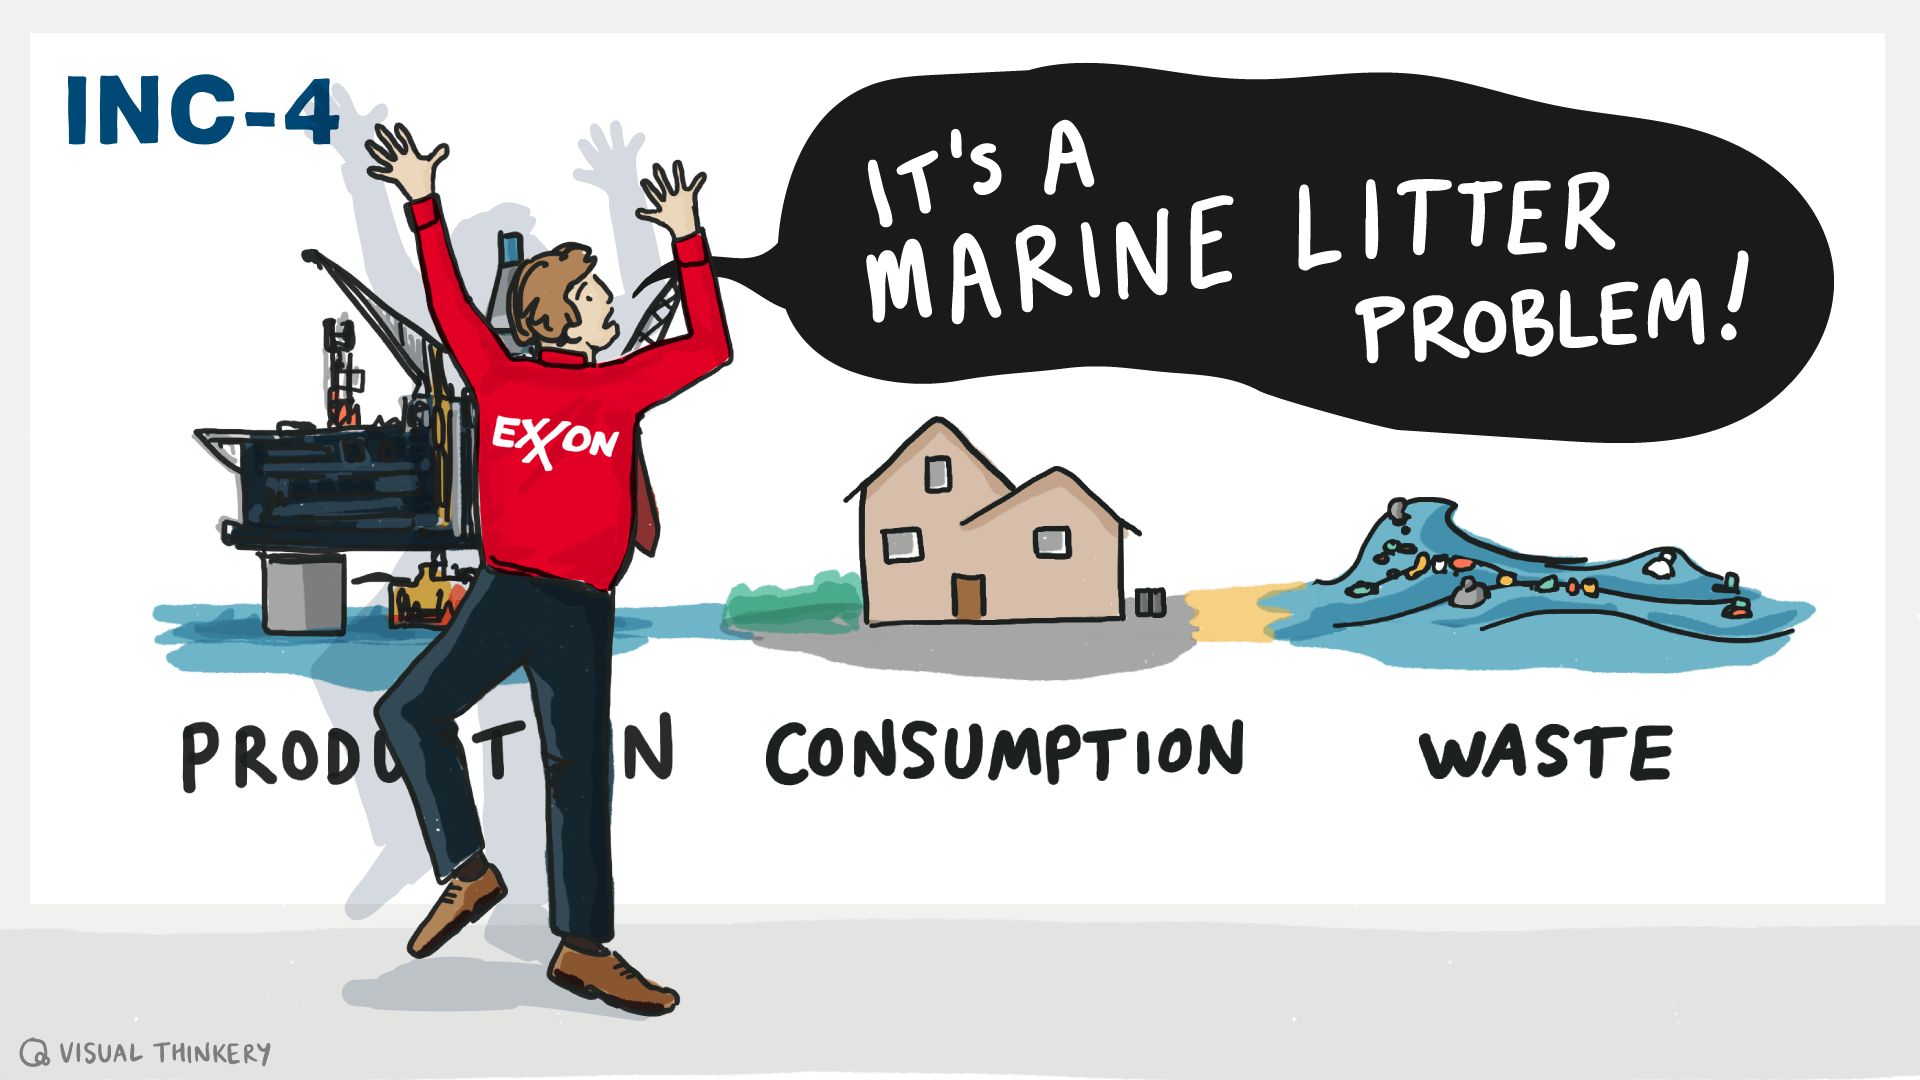 Its a marine litter problem INC4